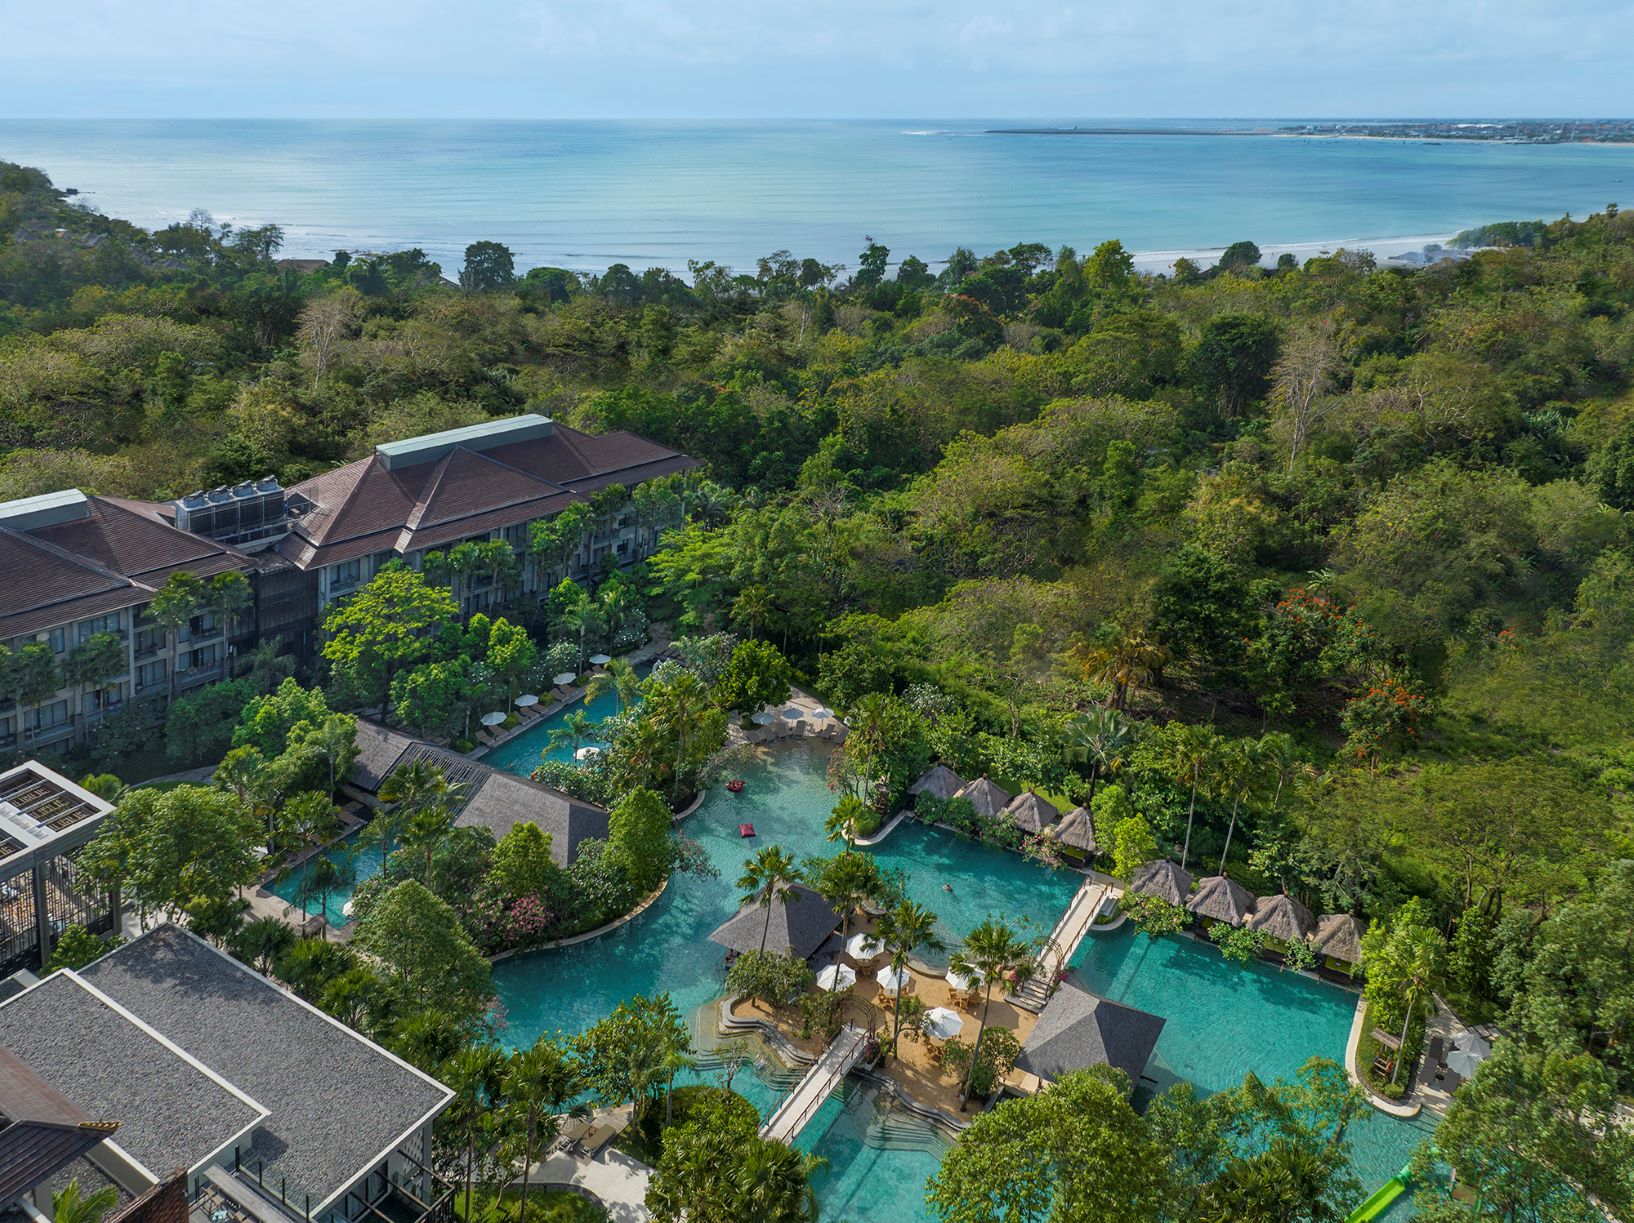 Movenpick Resort & Spa Jimbaran Bali to Showcase its Splendour at Bali Trip Sales Mission to India